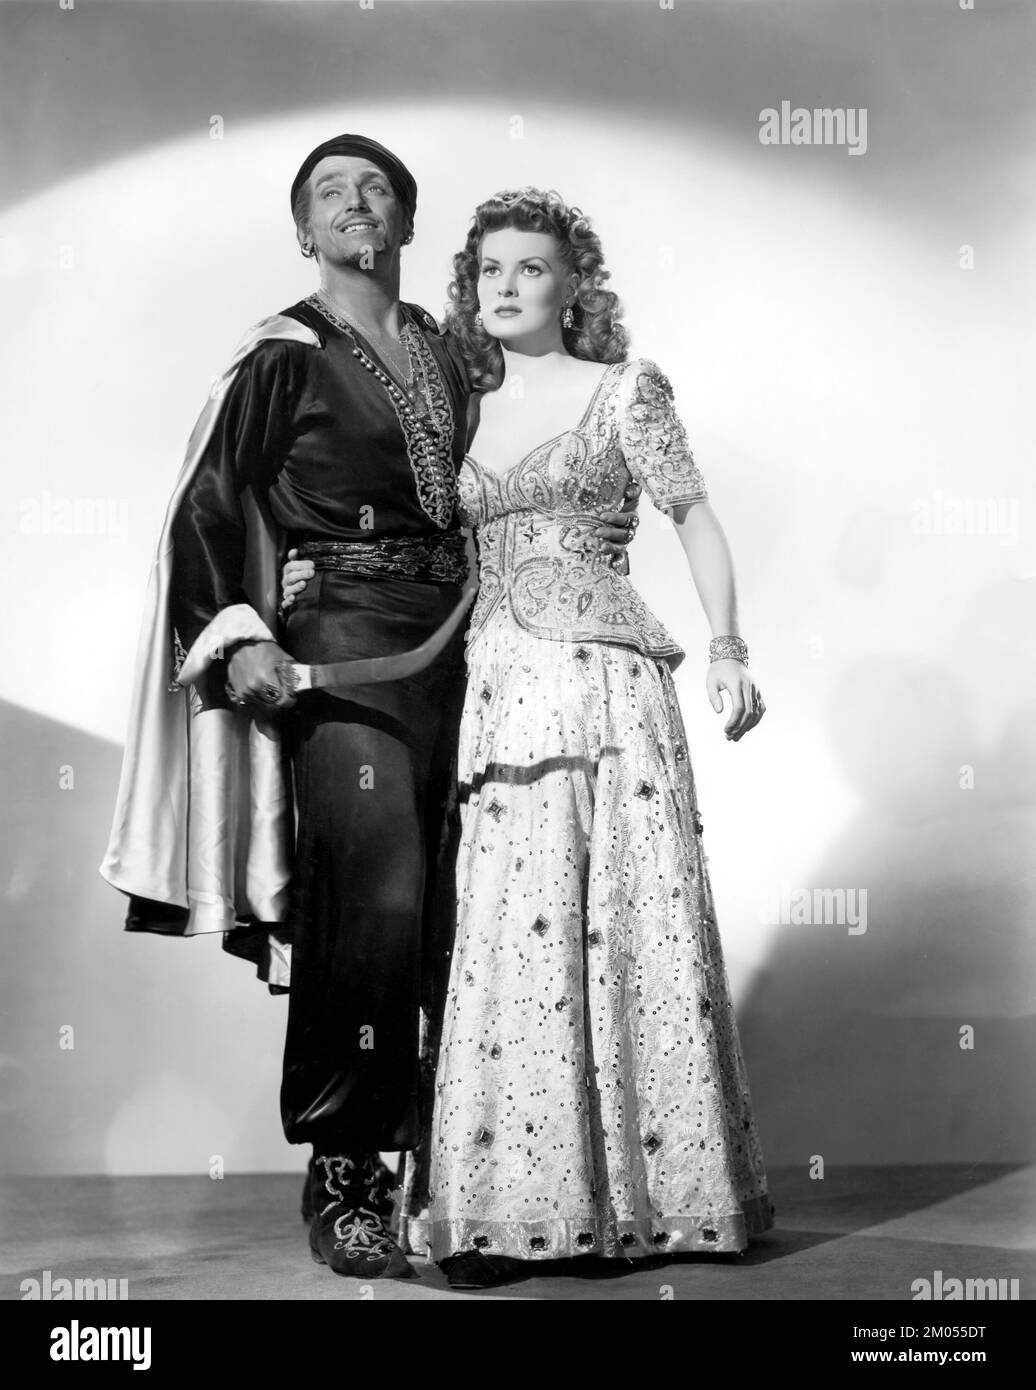 MAUREEN O'HARA and DOUGLAS FAIRBANKS JR. in SINBAD, THE SAILOR (1947), directed by RICHARD WALLACE. Credit: RKO / Album Stock Photo